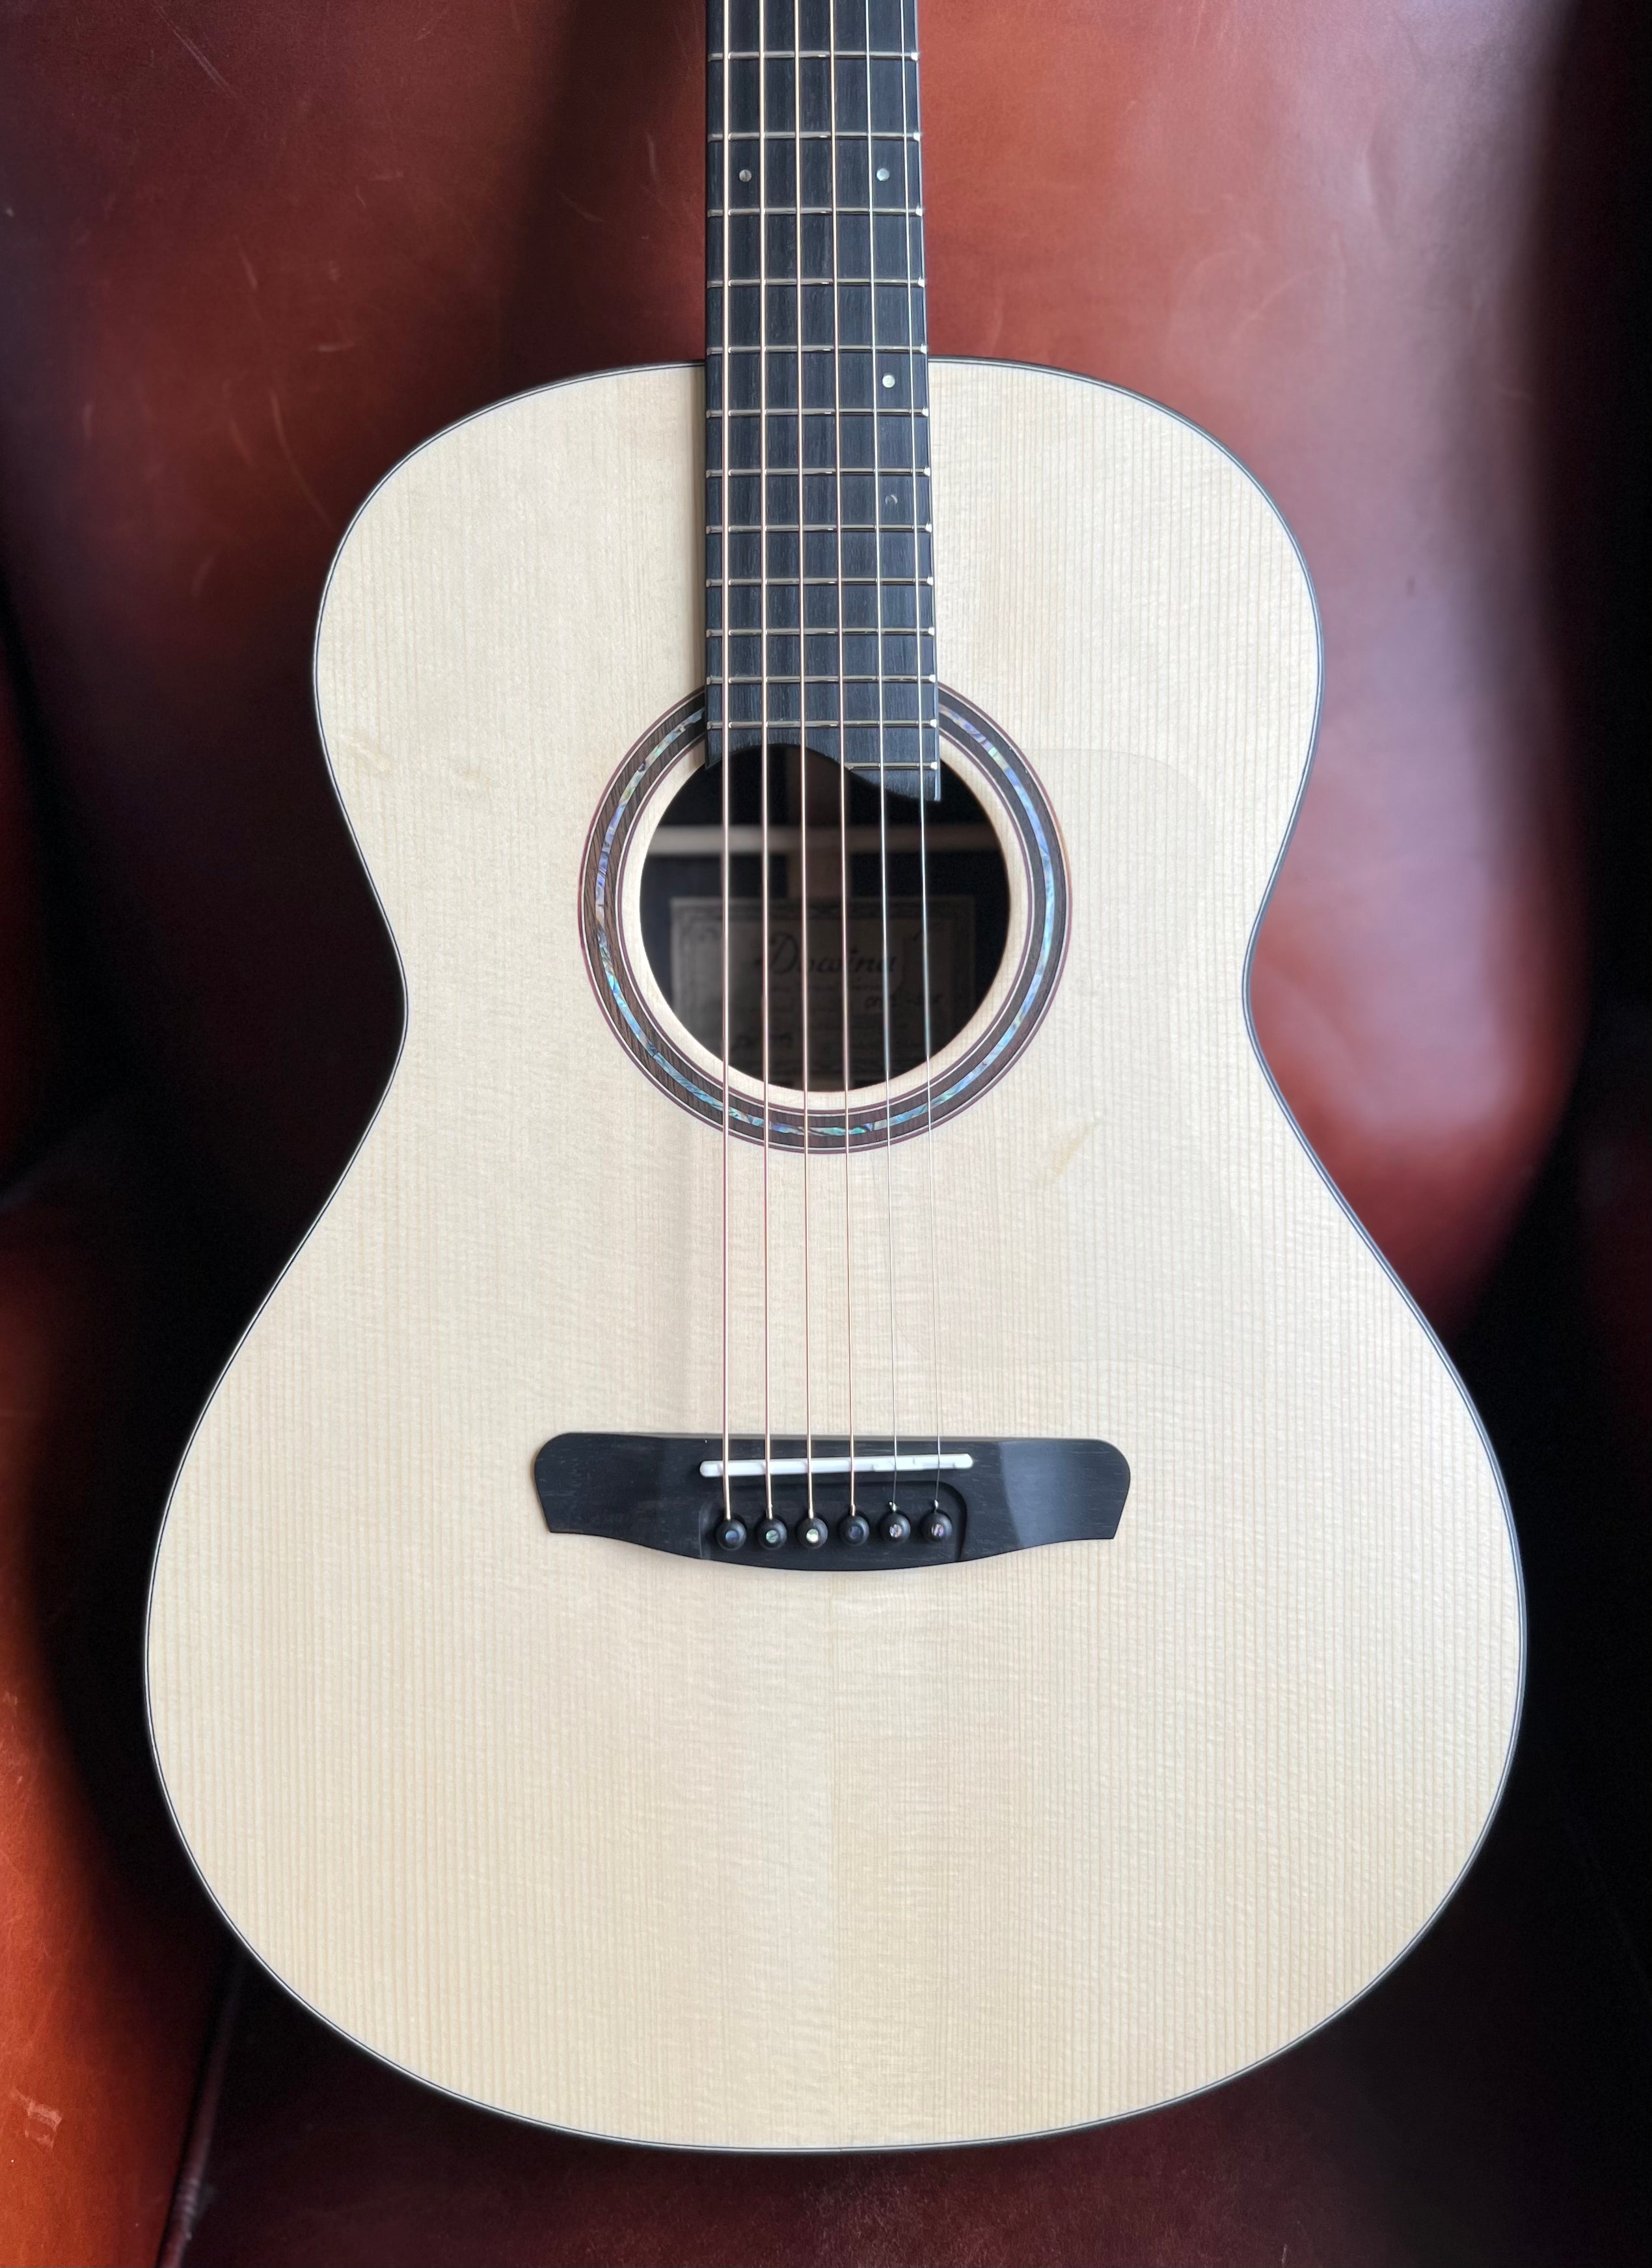 Dowina Rosewood OMG Spruce  .  OM Body Acoustic Guitar, Acoustic Guitar for sale at Richards Guitars.